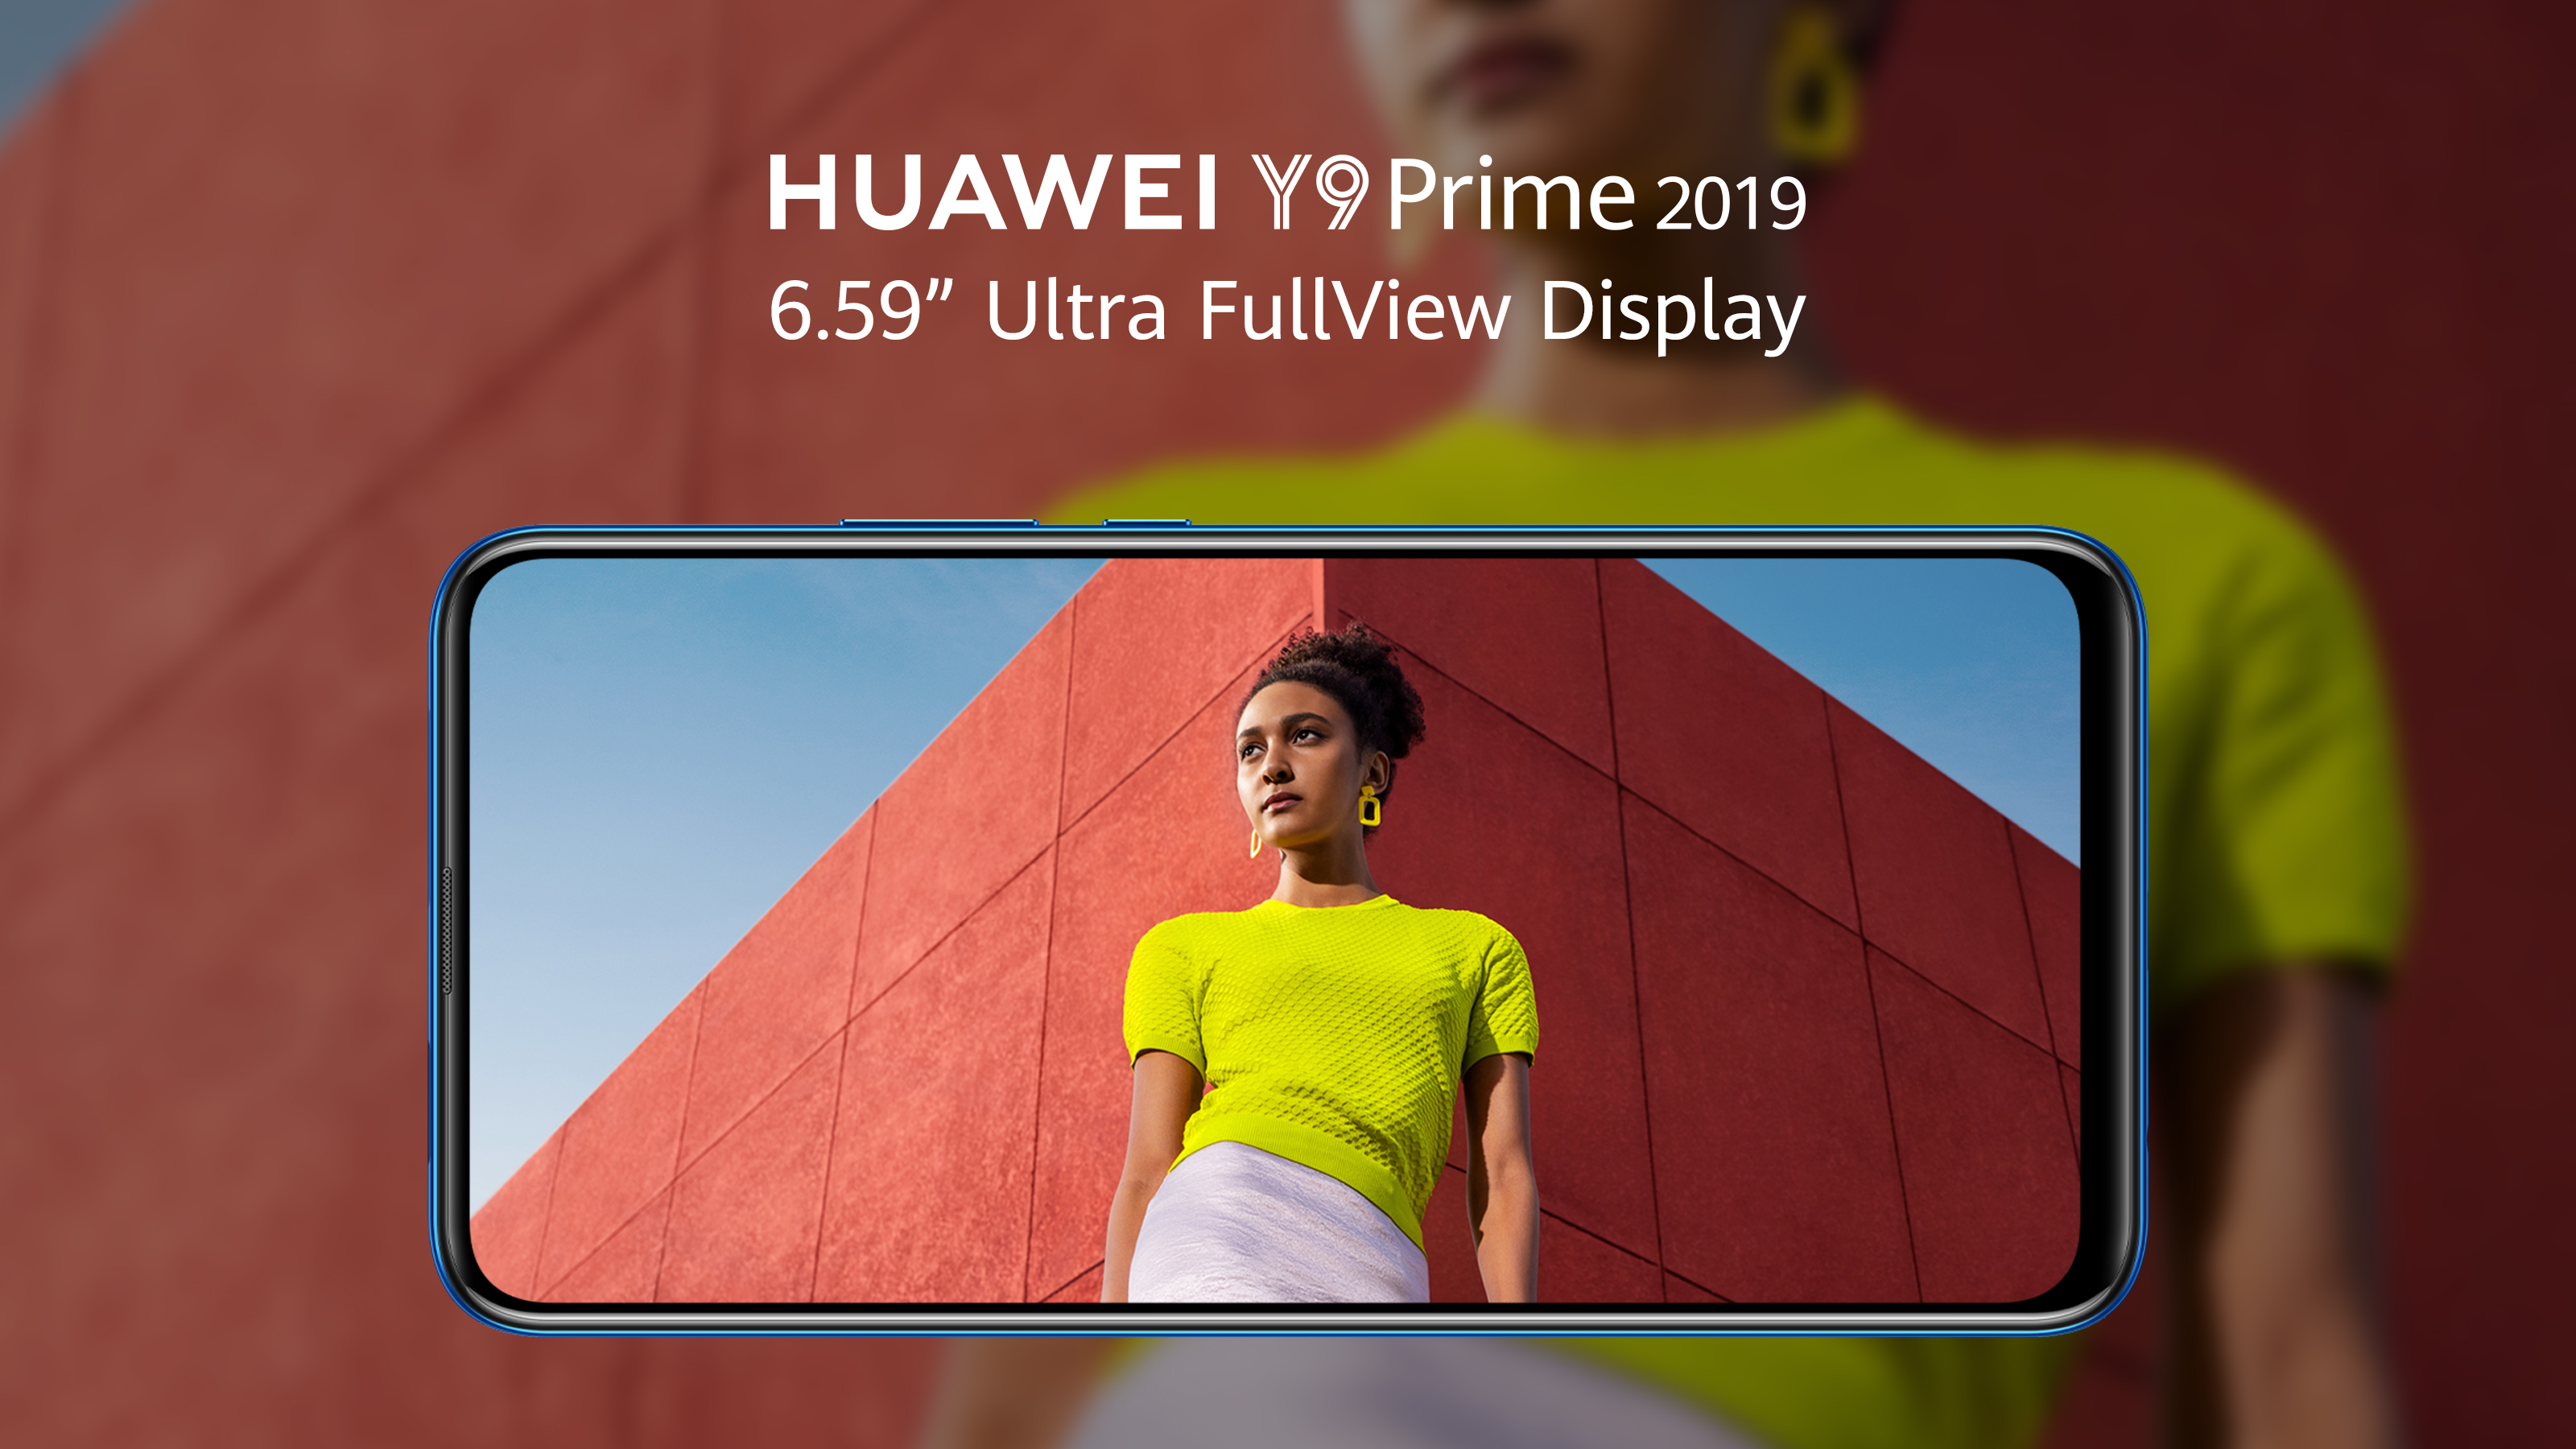 Lifestyle-HUAWEI Ultra Fullview Display